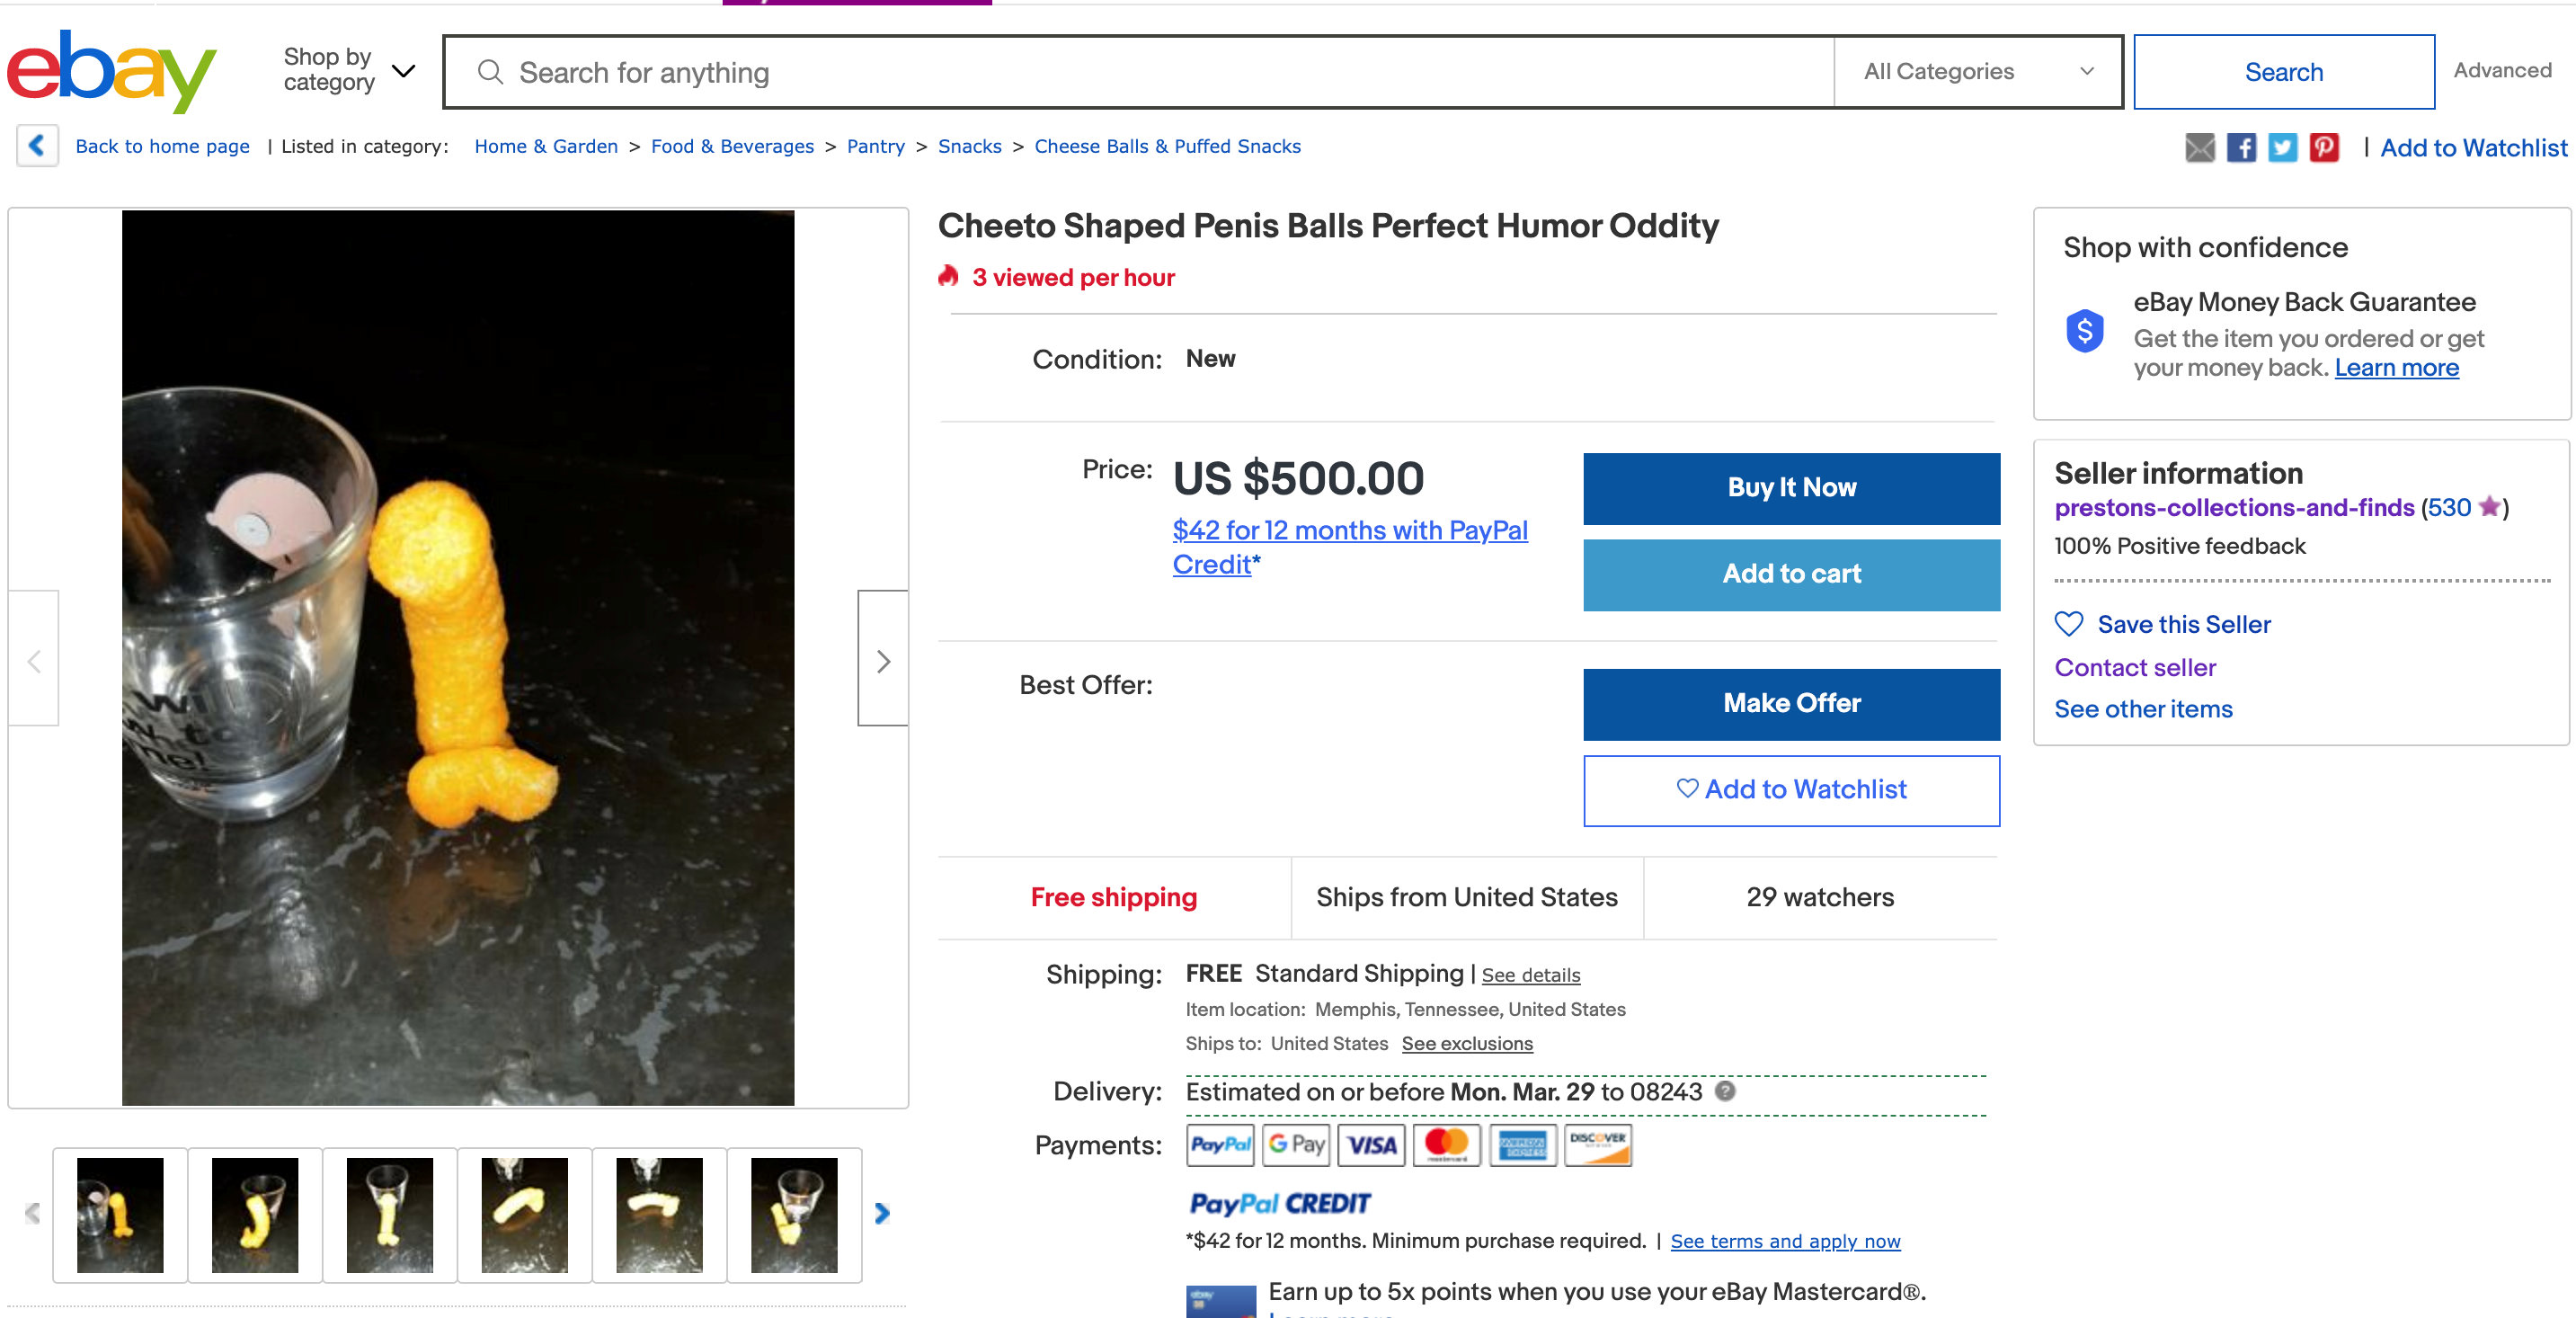 ​Cheeto That Looks Like Arnold Schwarzenegger On Sale For £7,000